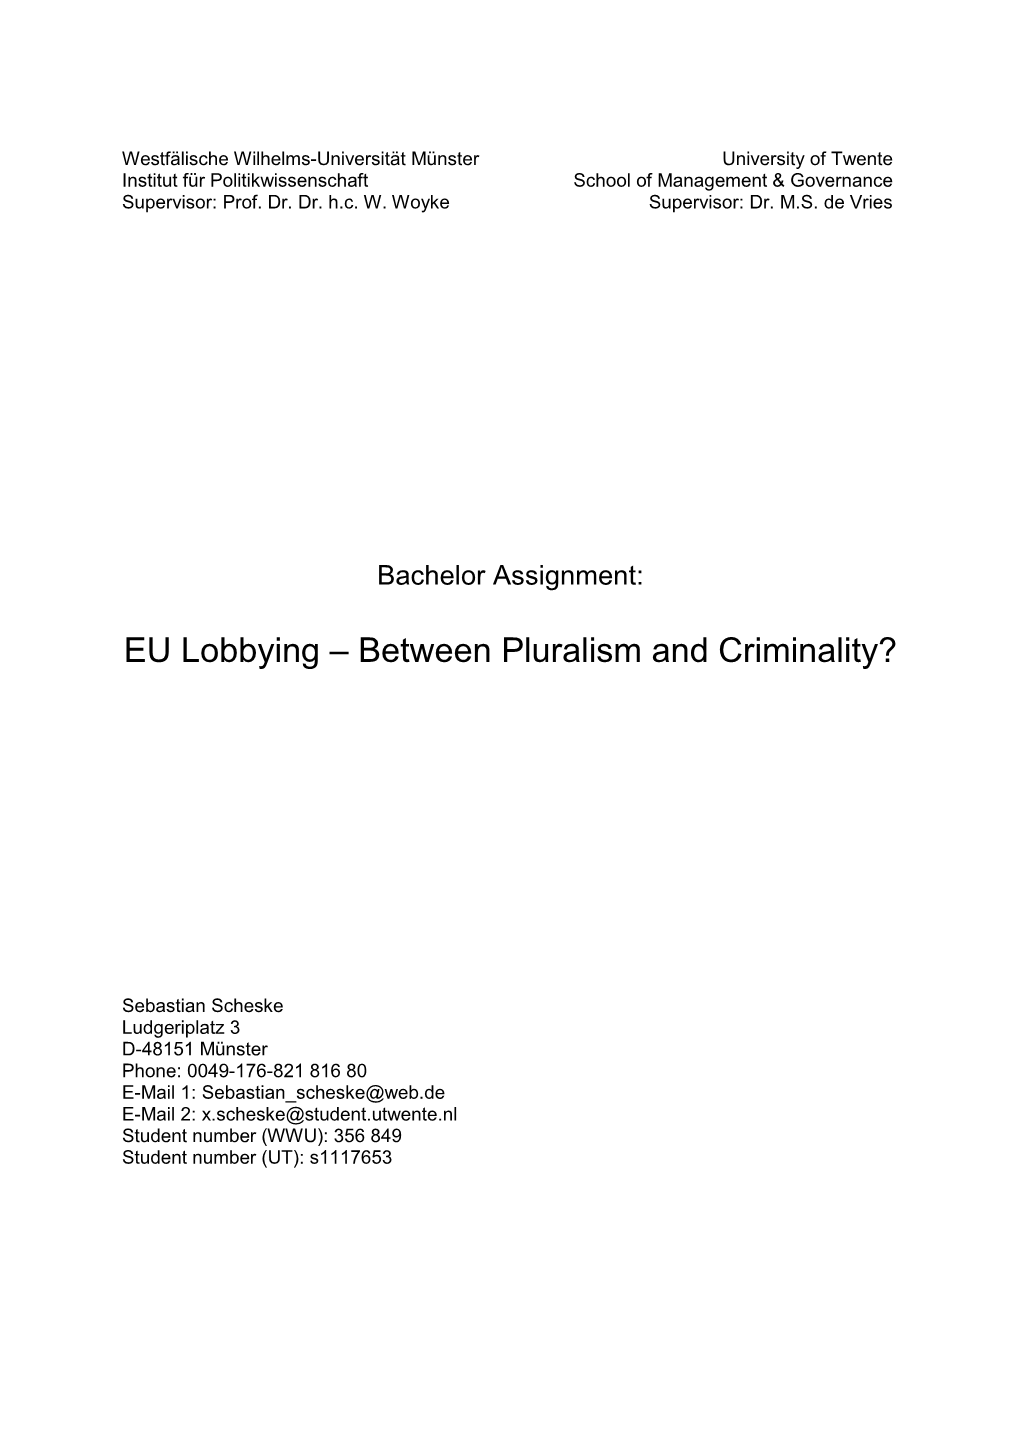 EU Lobbying – Between Pluralism and Criminality?